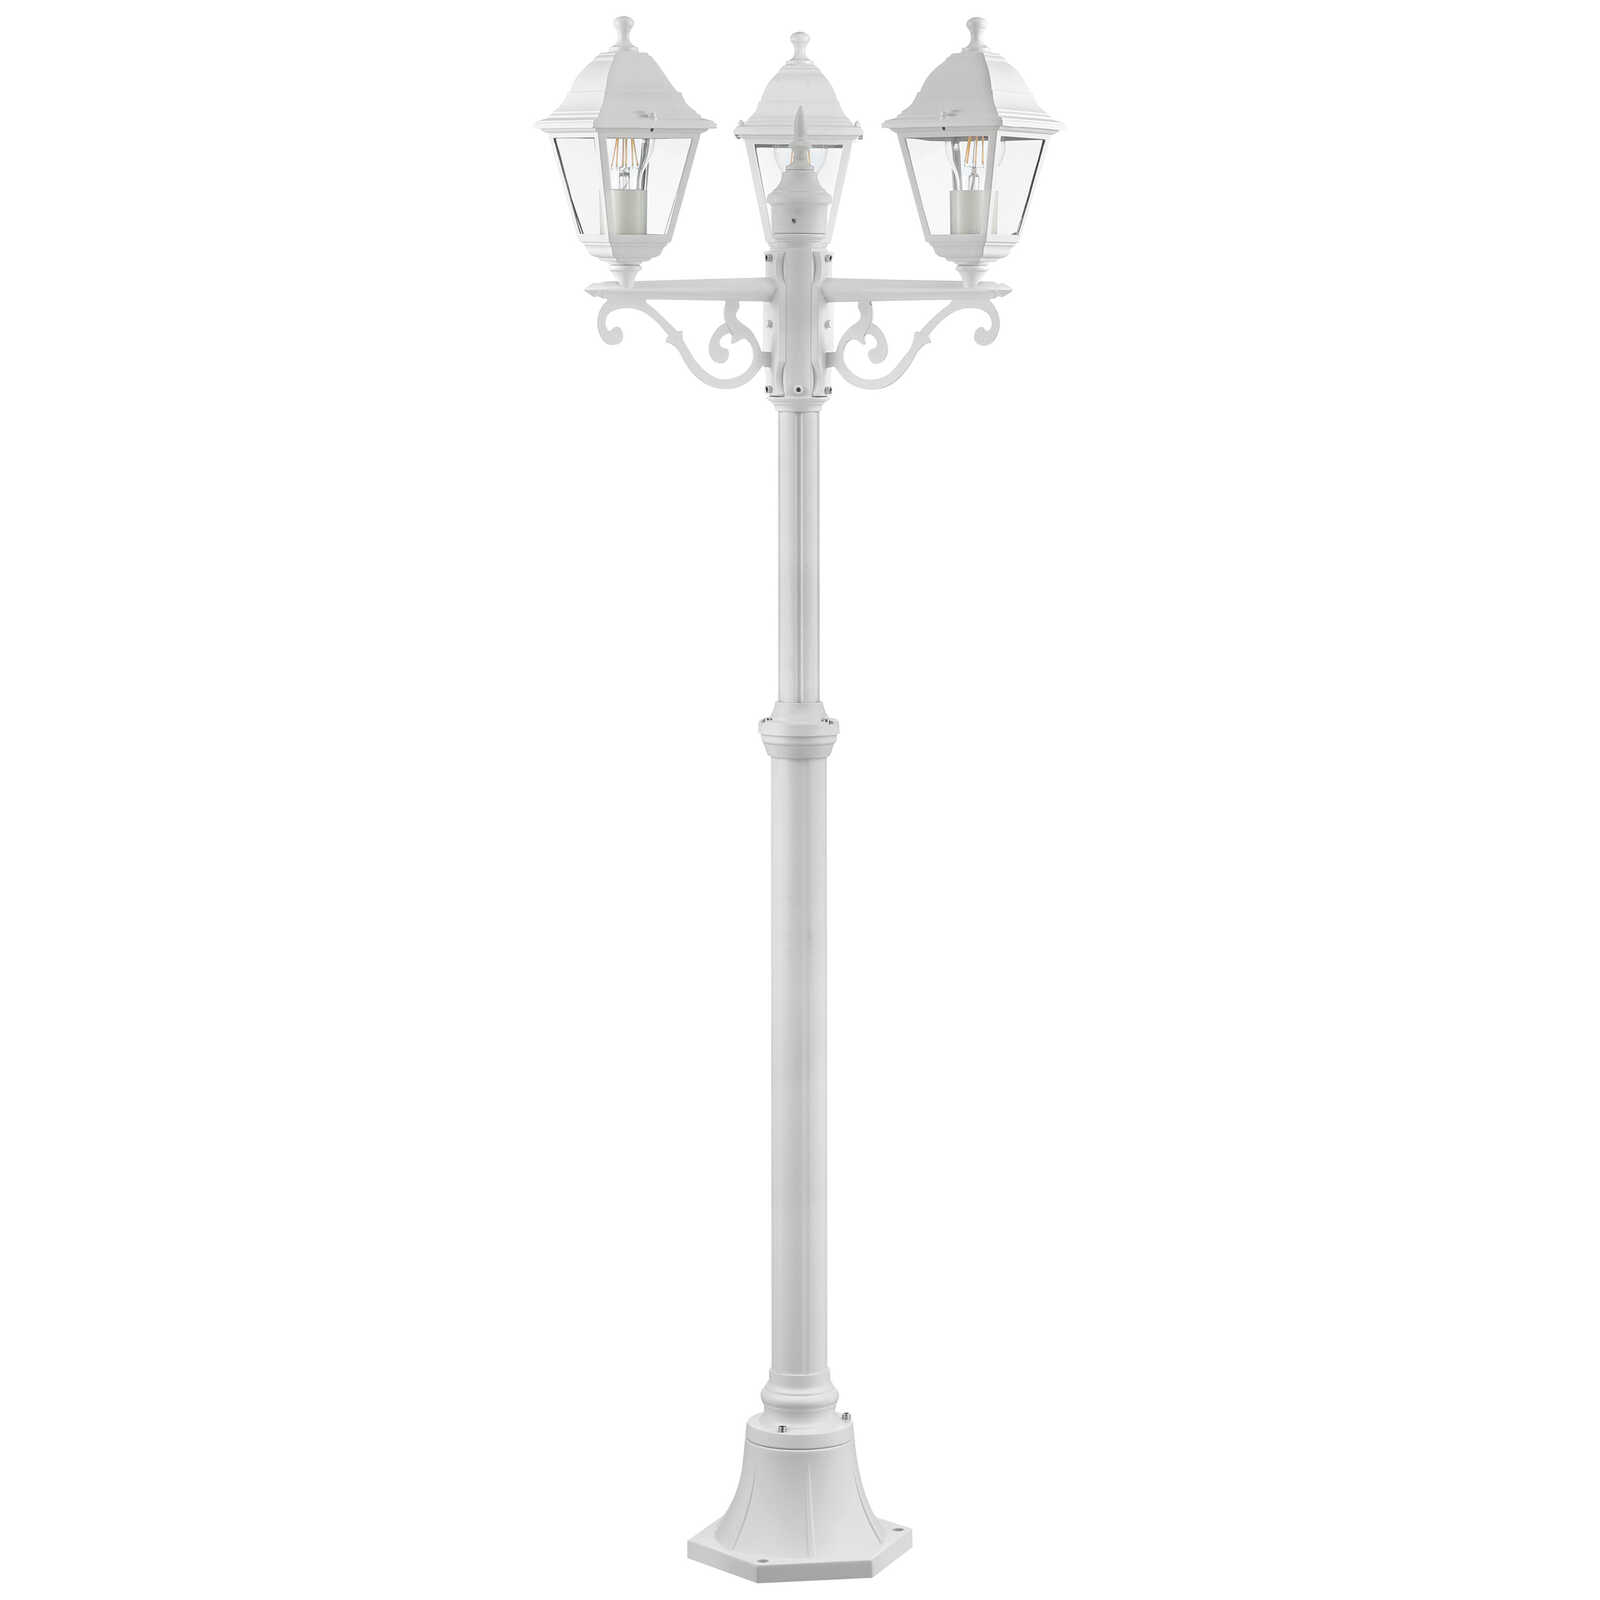             Glass outdoor floor lamp - Luis 1 - White
        